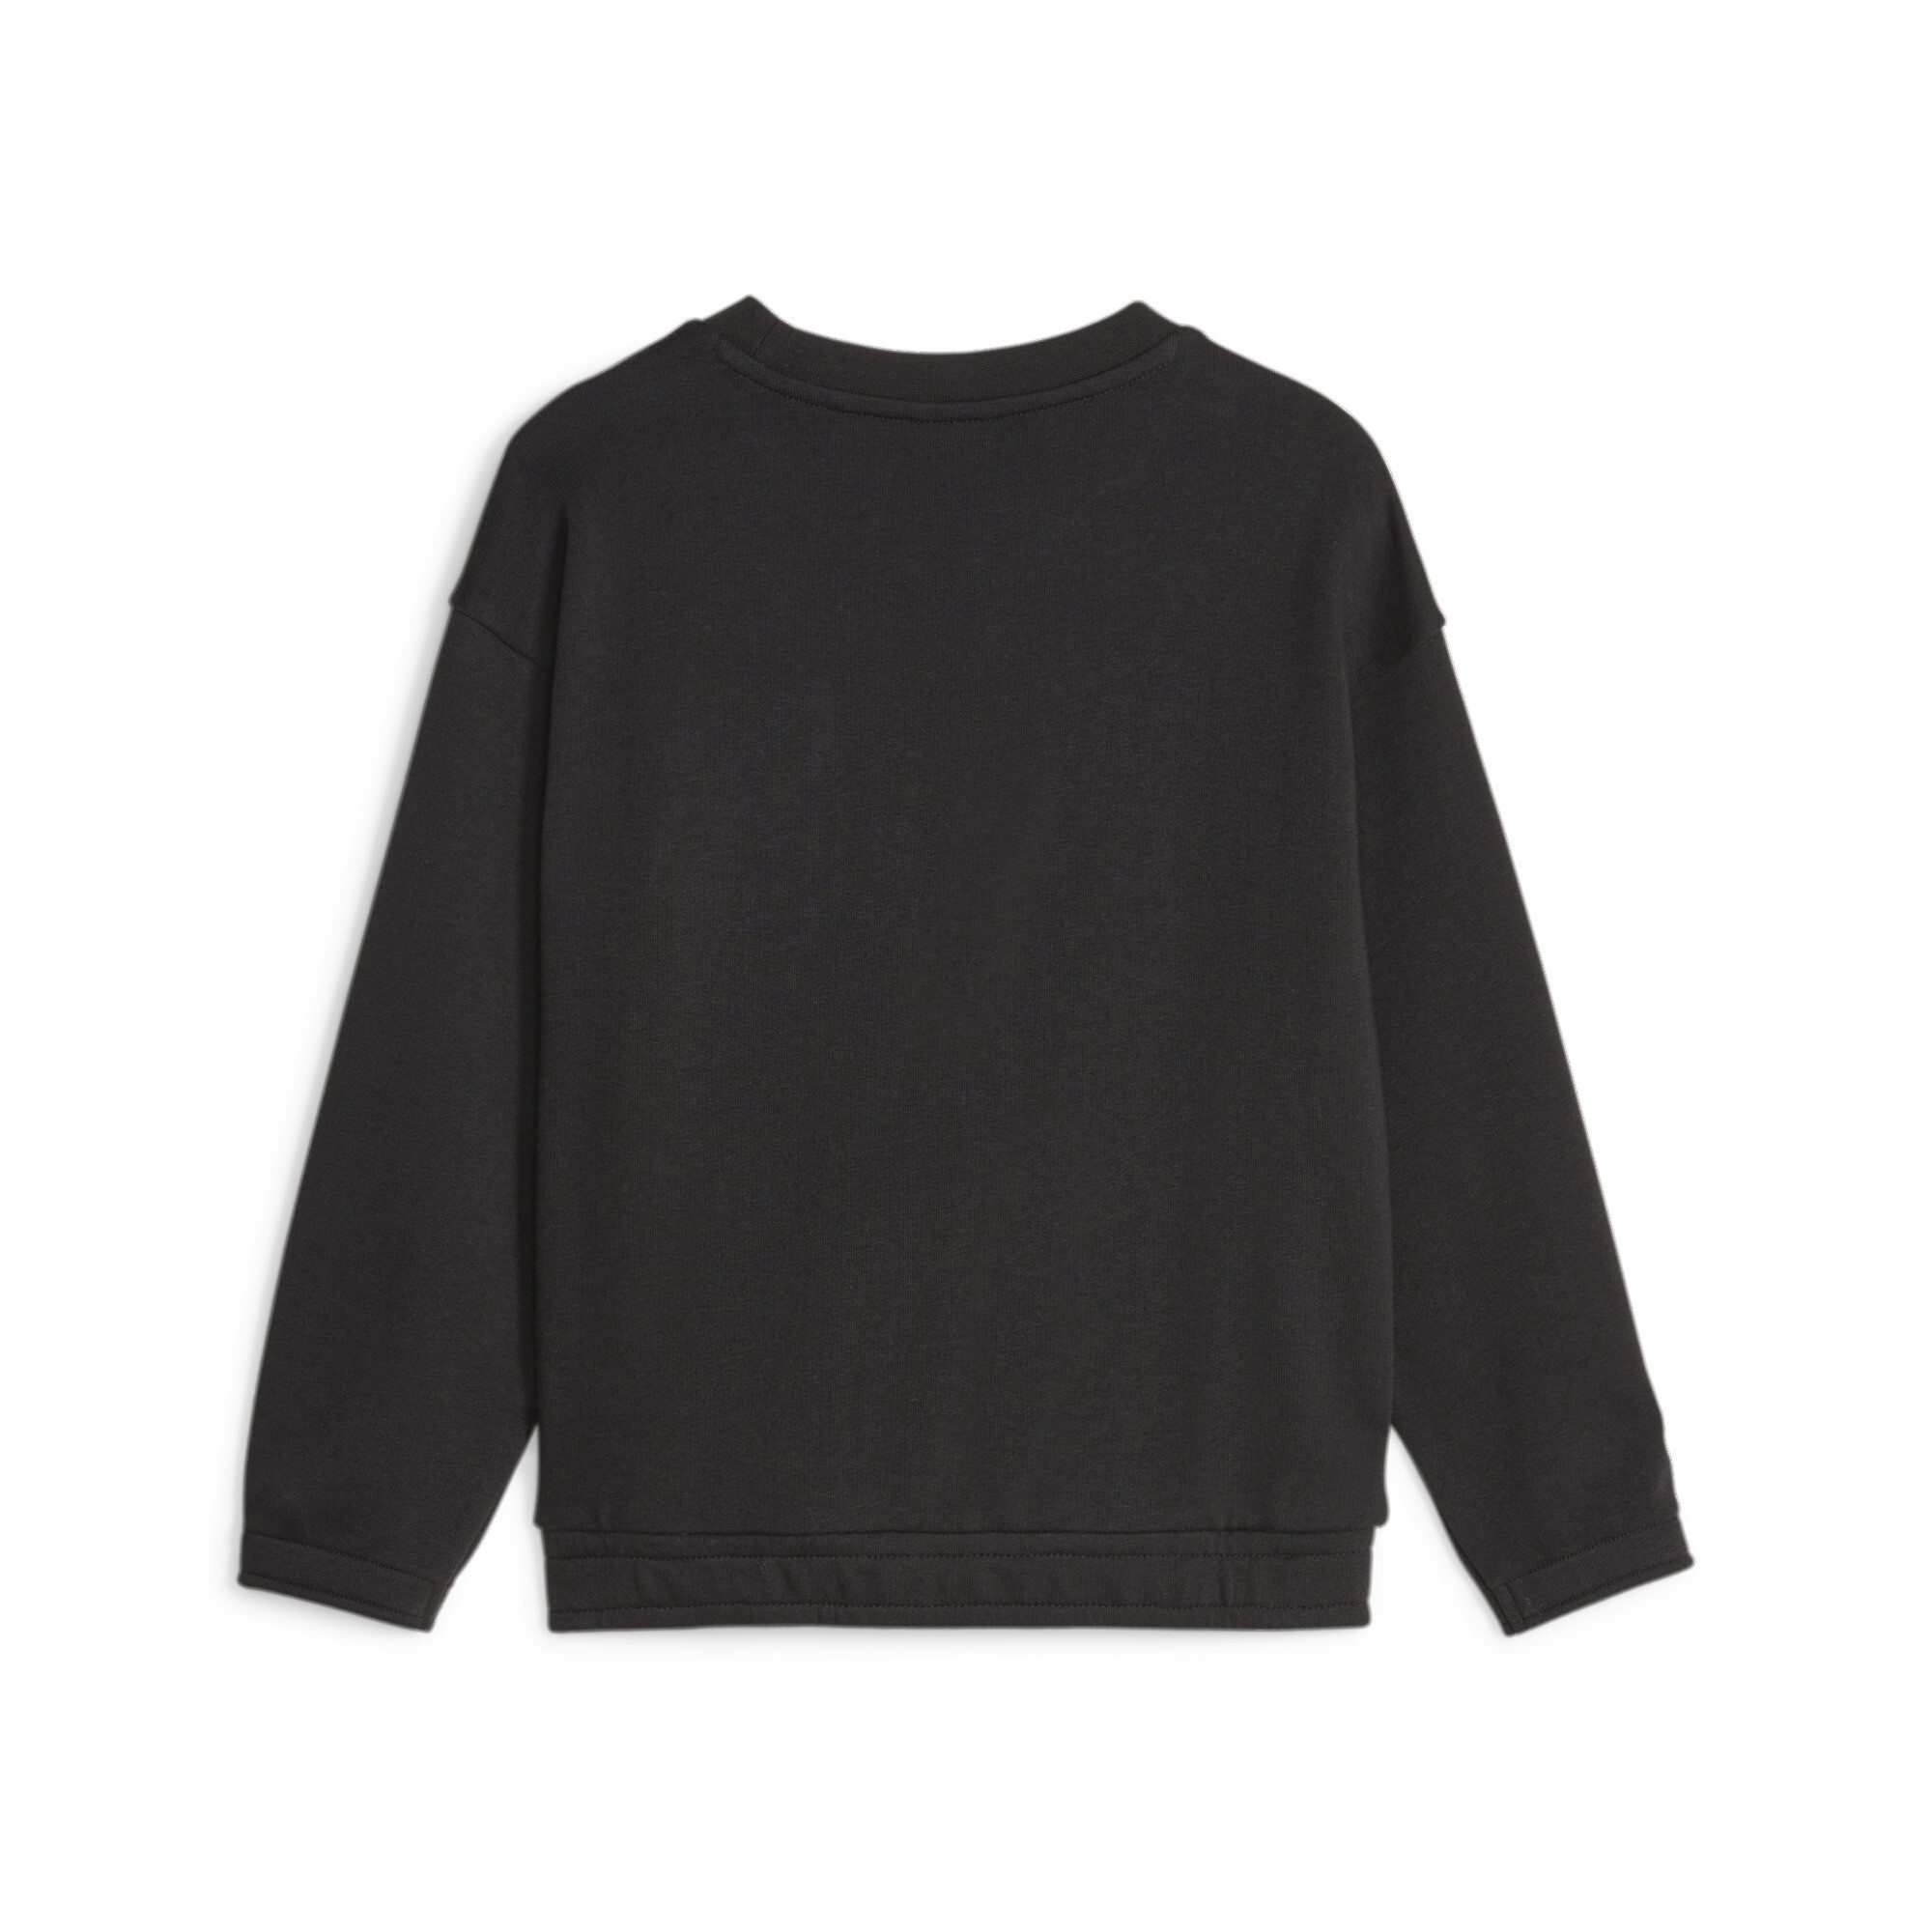 PUMA Classics Mix Match Sweatshirt In Black, Size 3-4 Youth